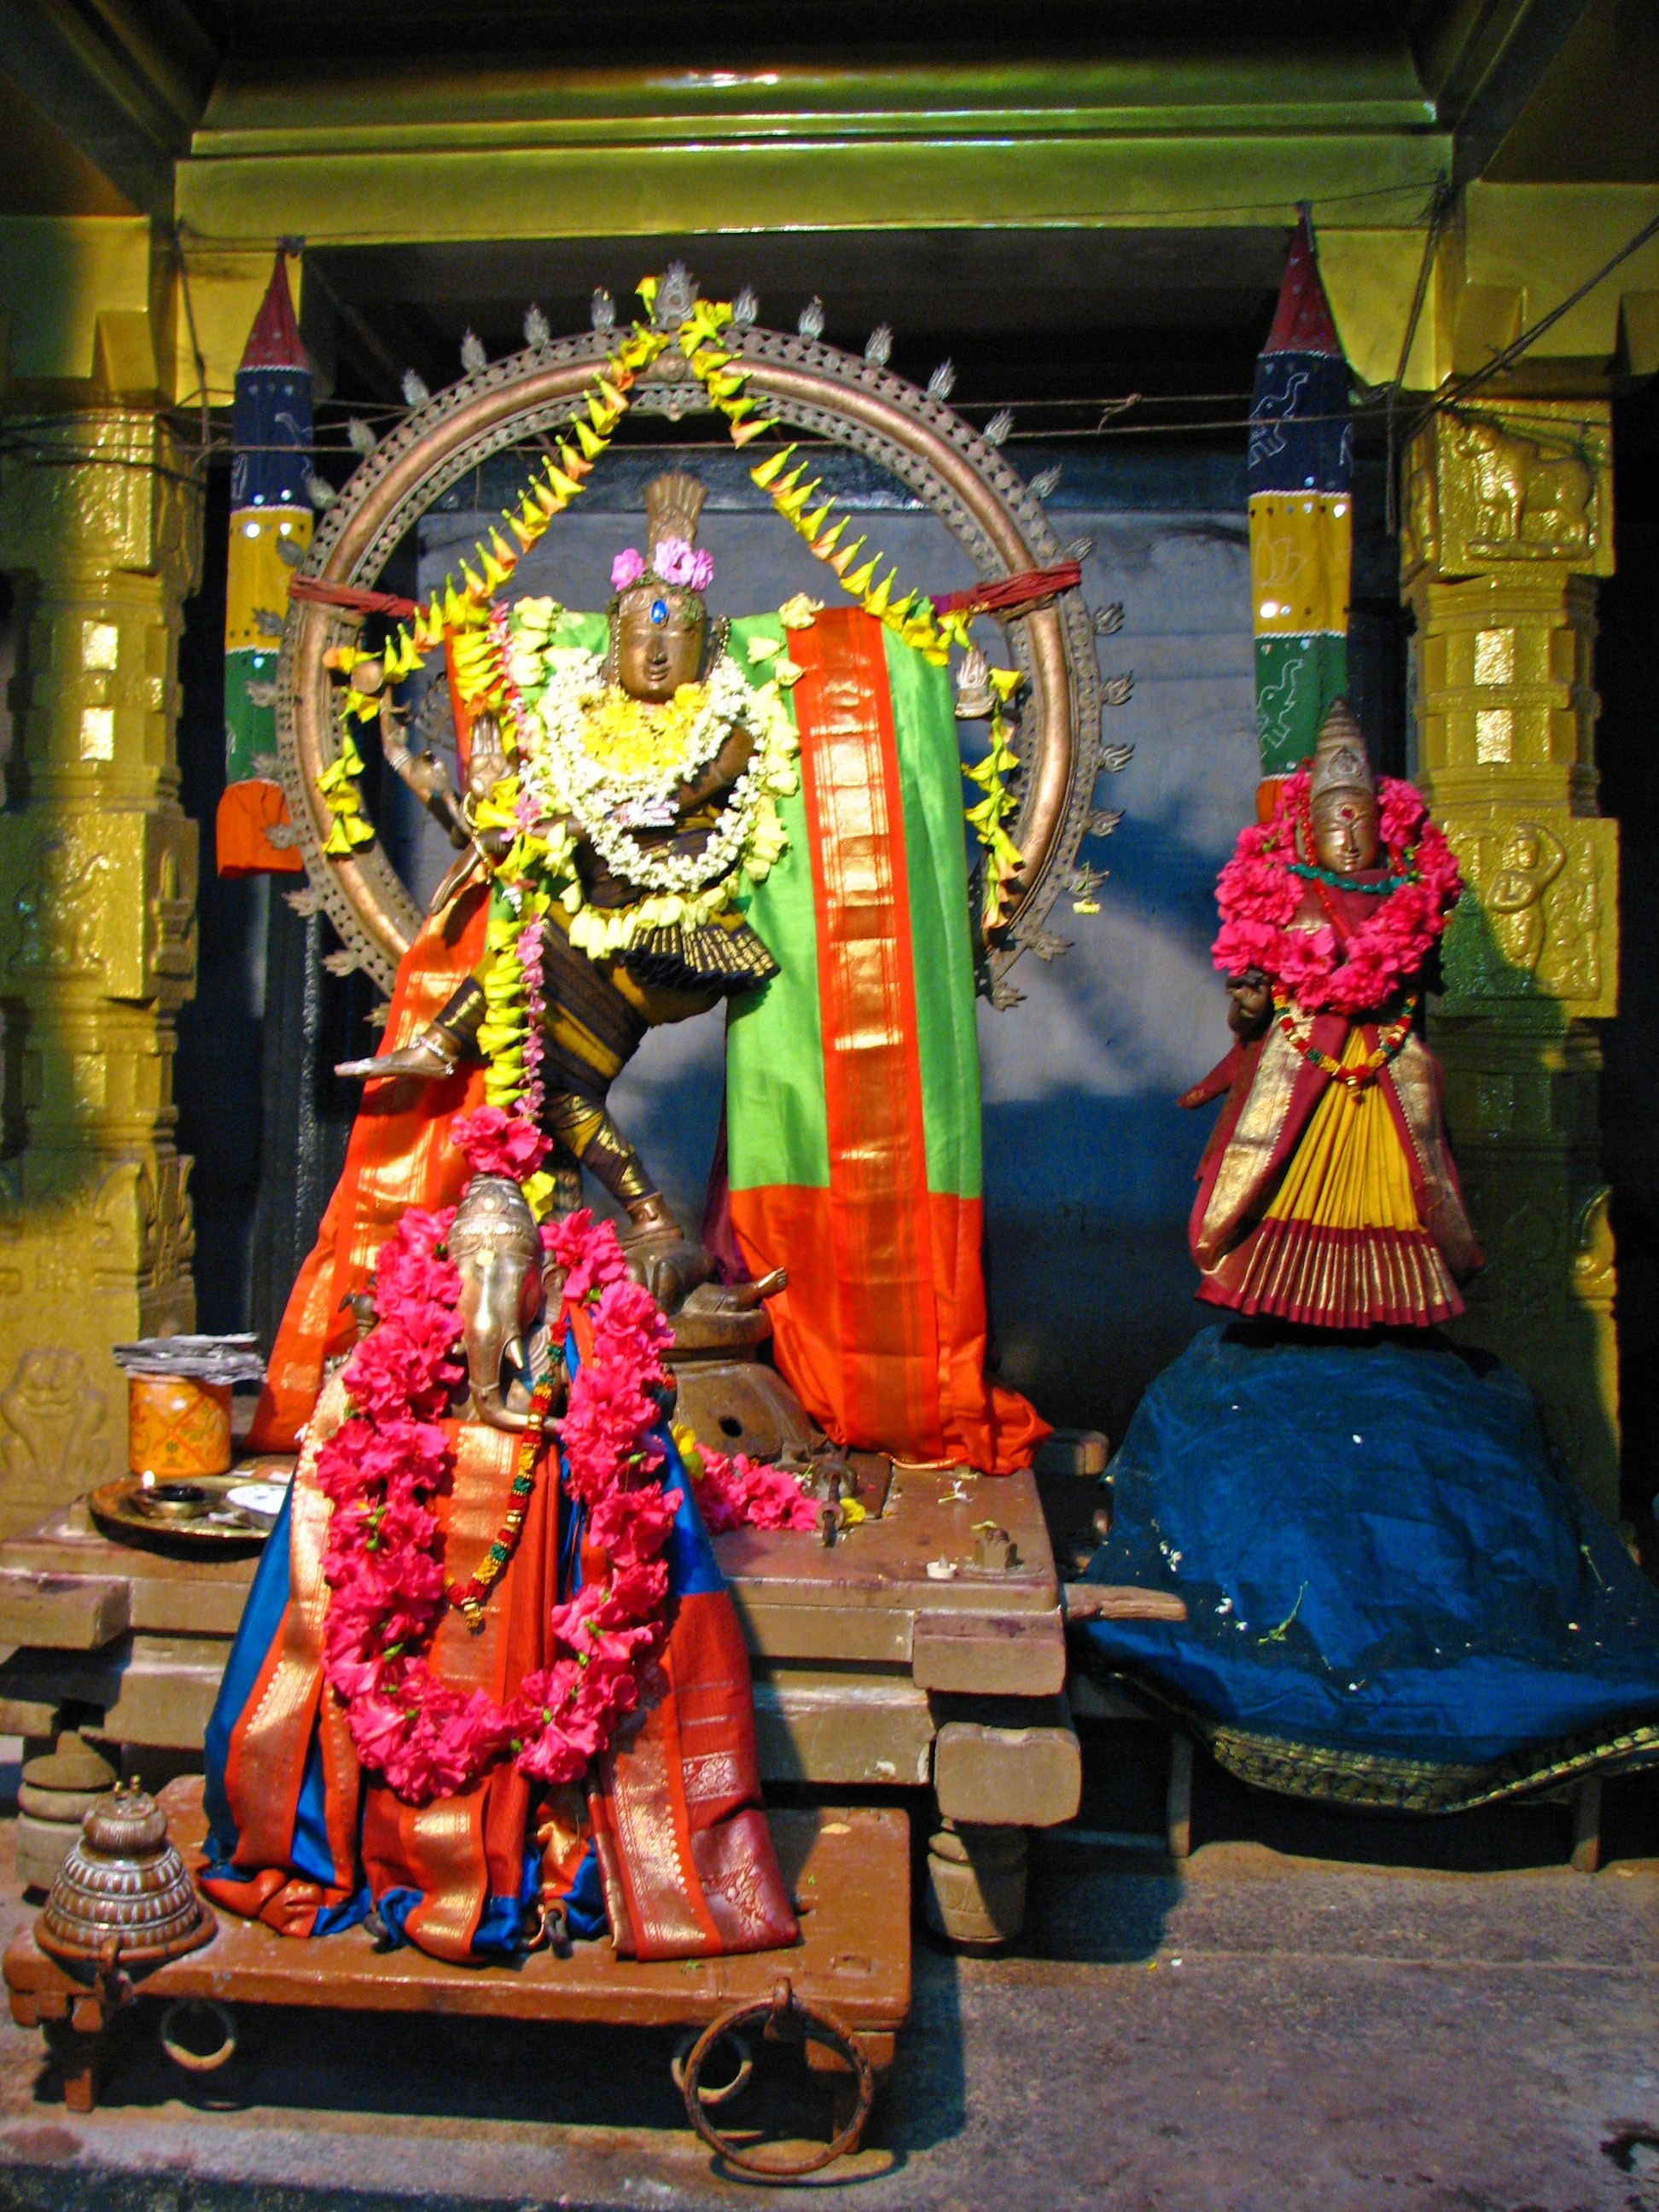 Ekambareswarar Temple Pooja